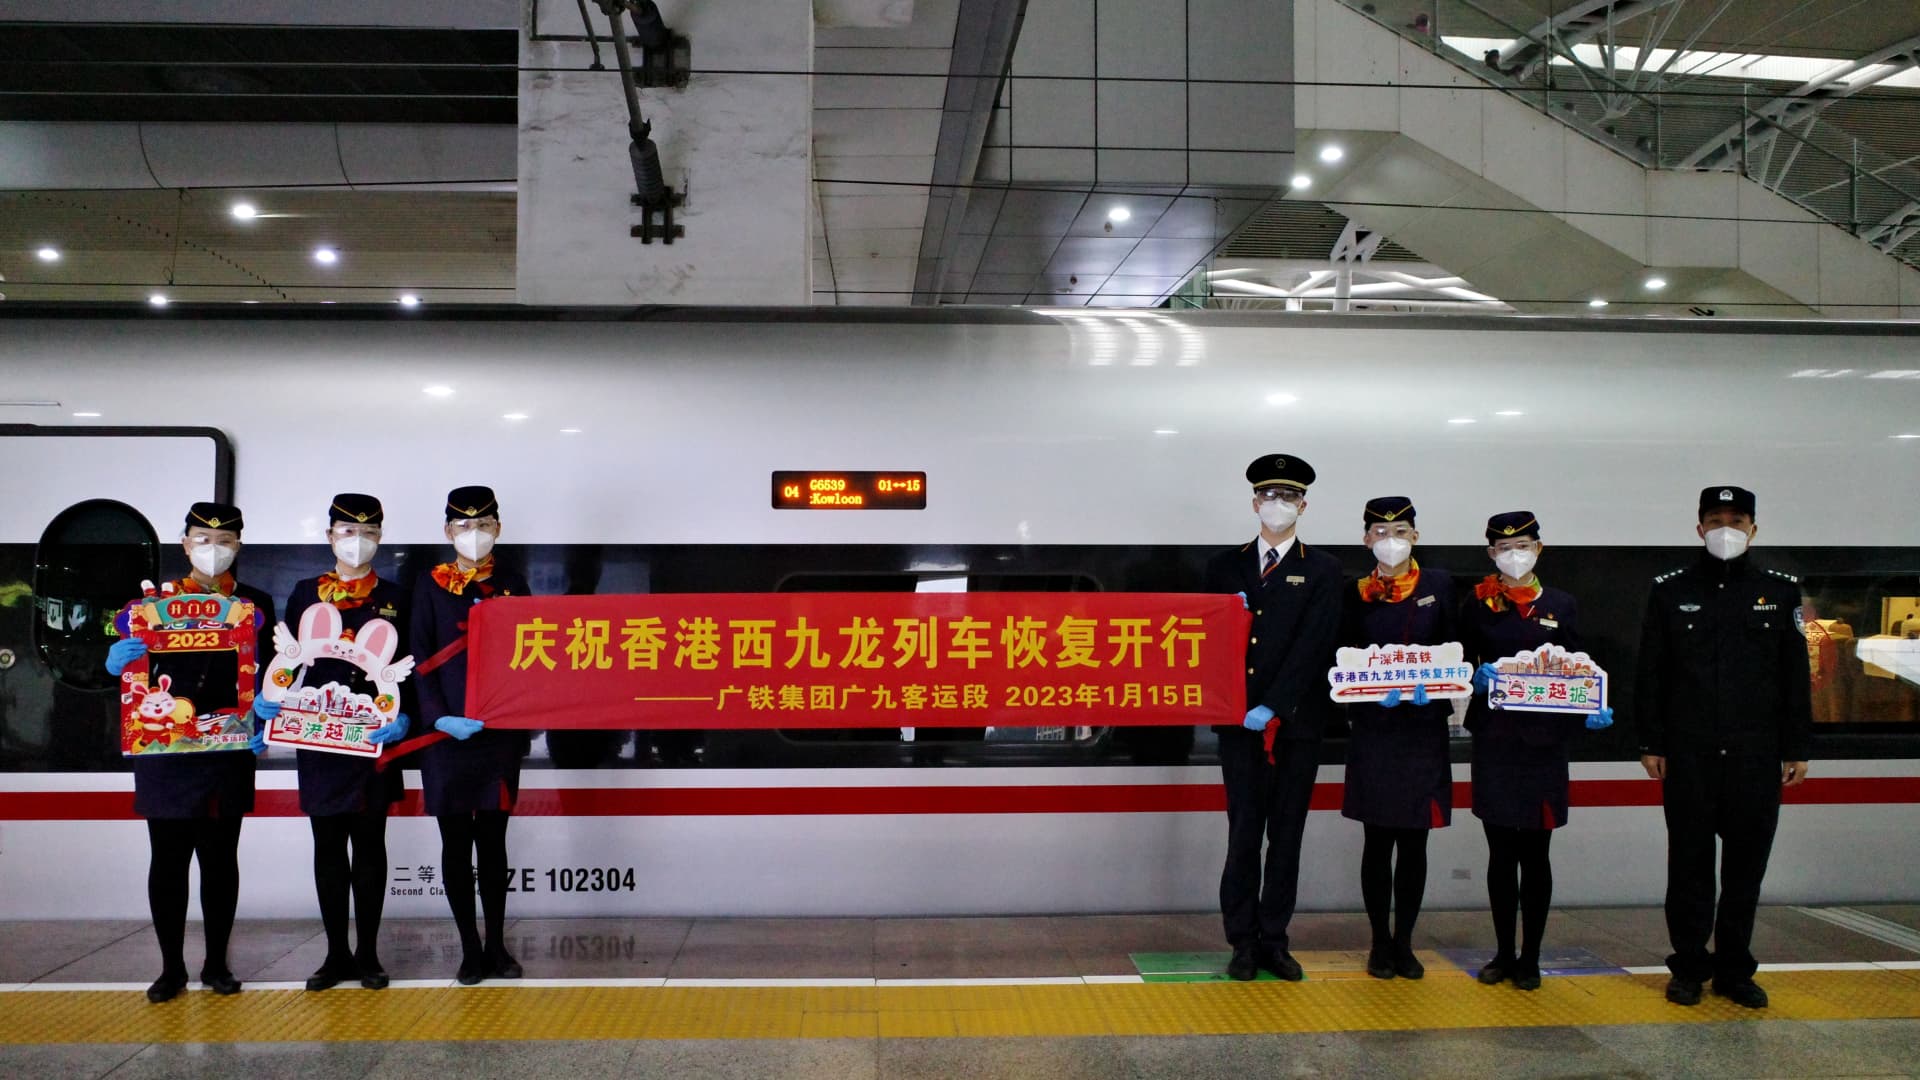 China, Hong Kong resume high-speed rail link after 3 years of Covid curbs